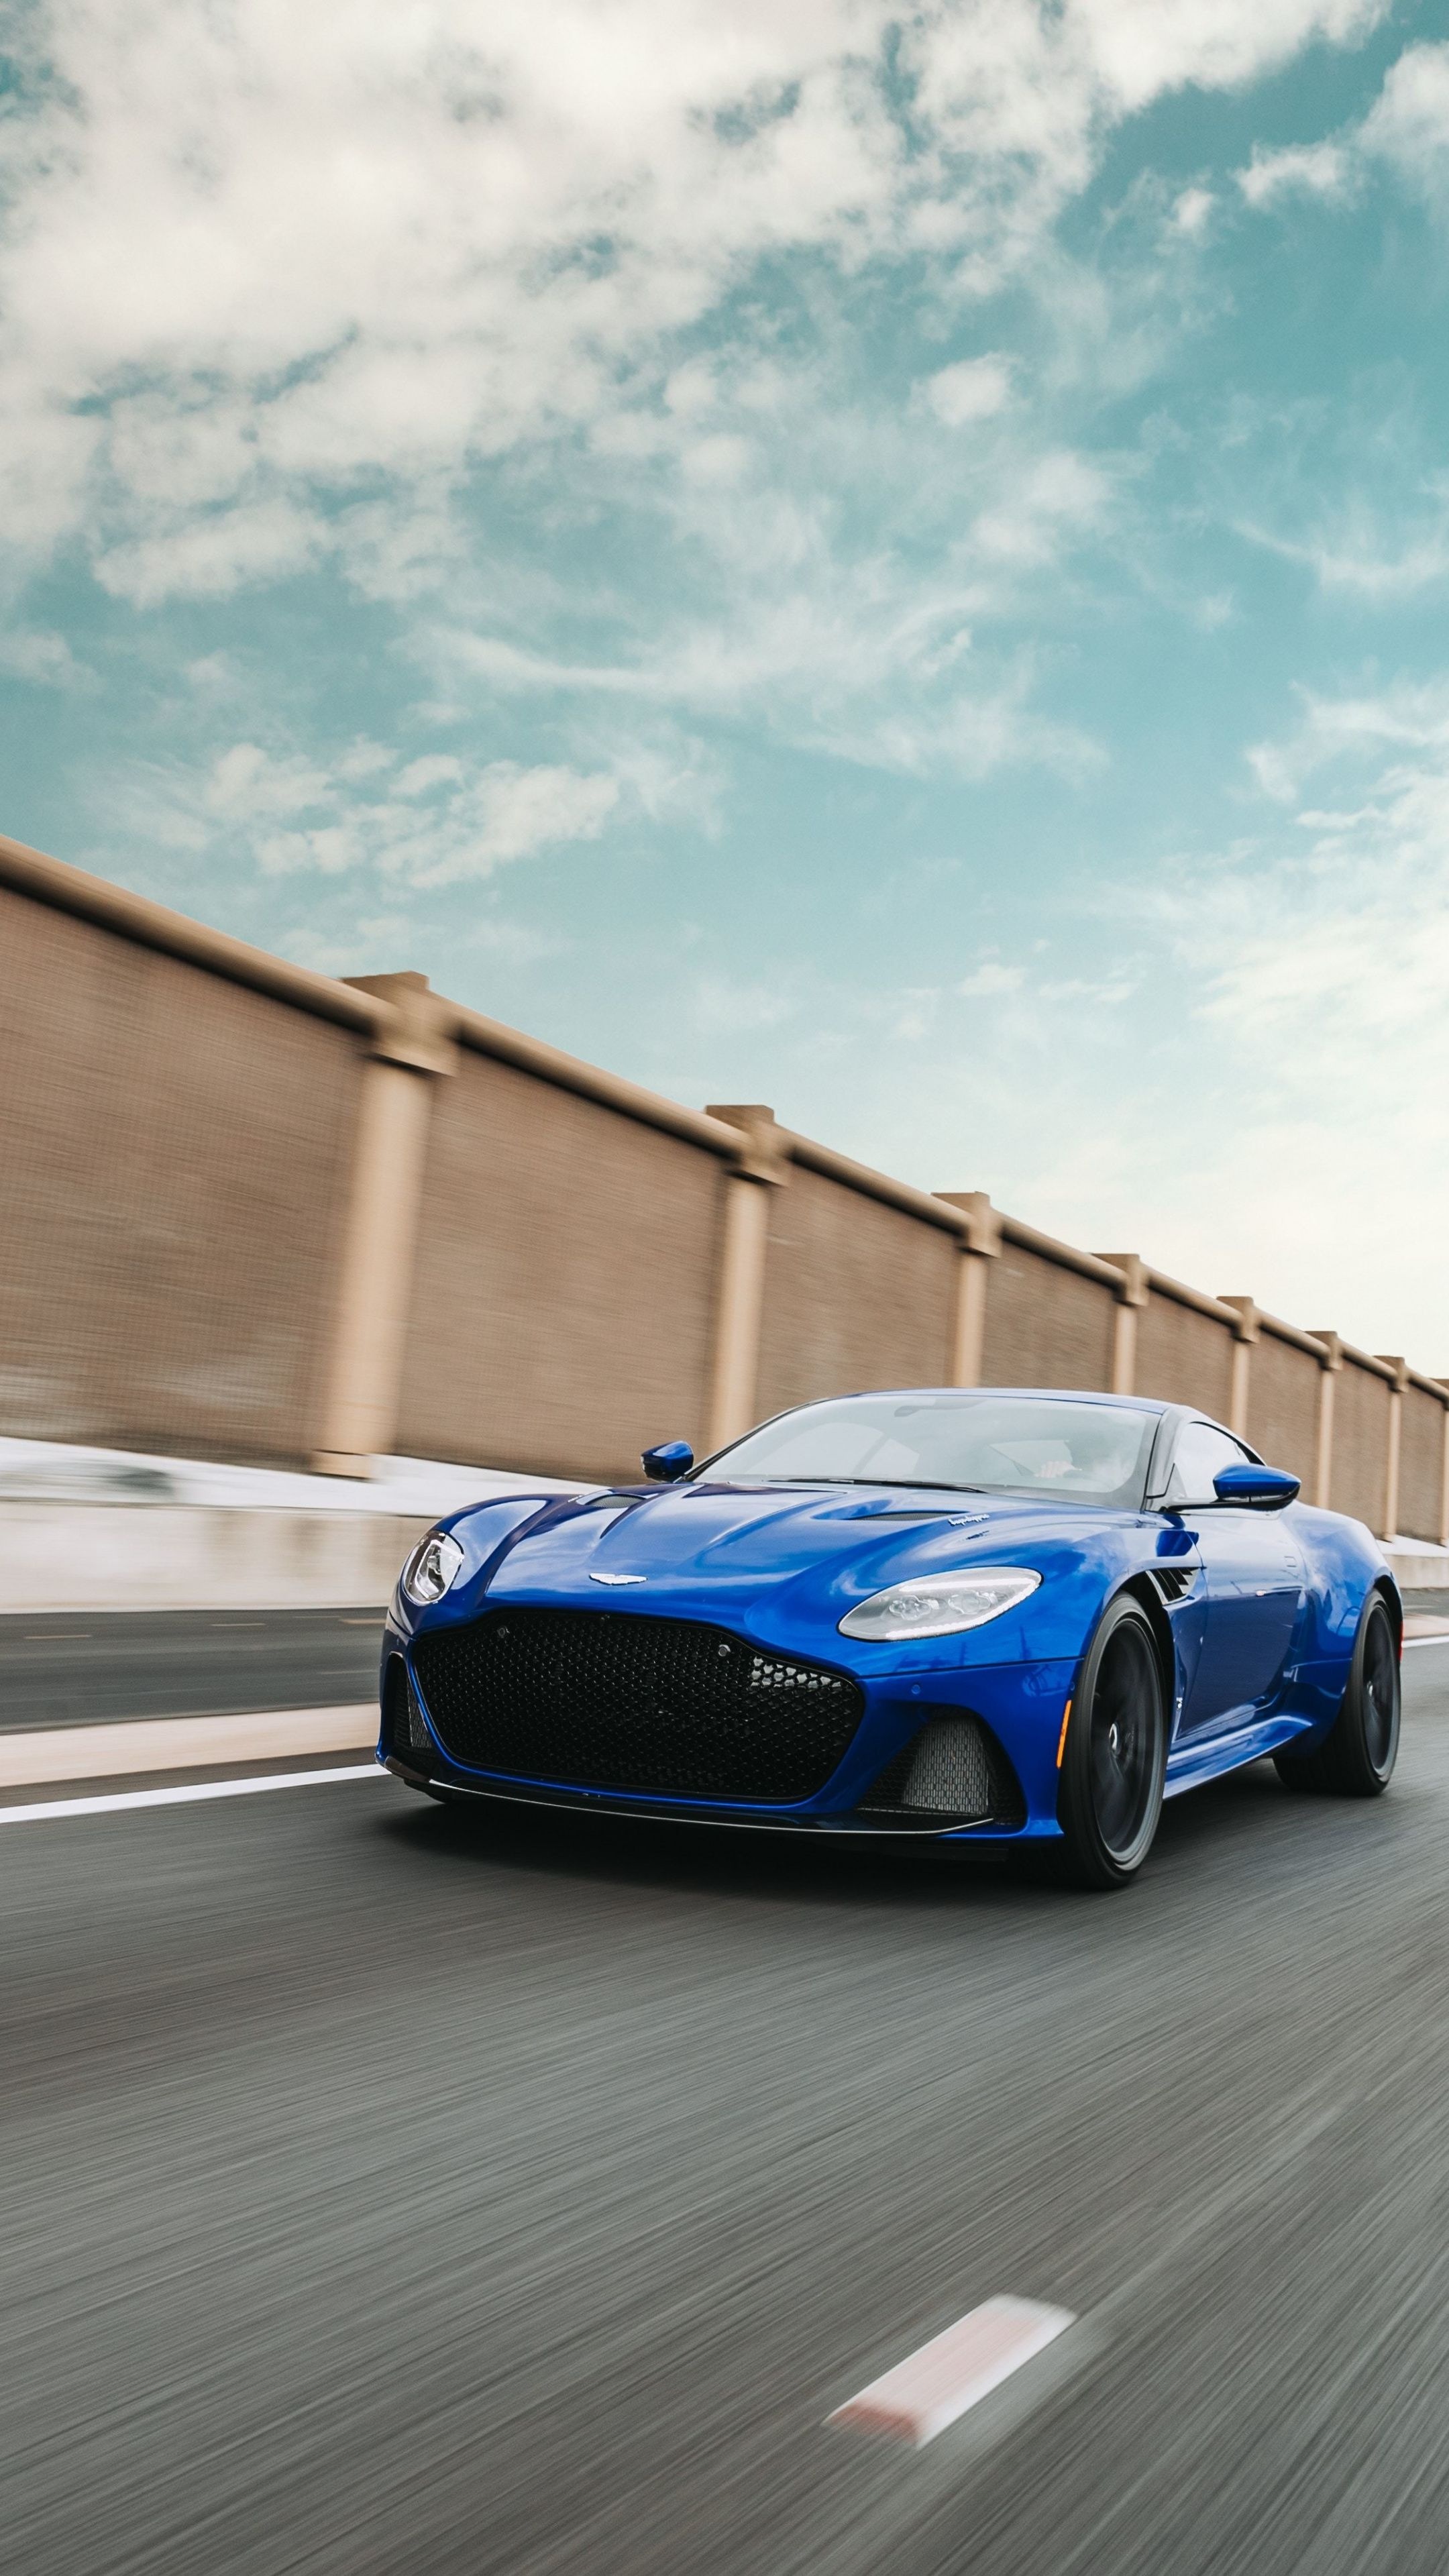 Aston Martin Vantage, Blue sports car delight, Stunning wallpaper background, Automotive elegance, 2160x3840 4K Handy